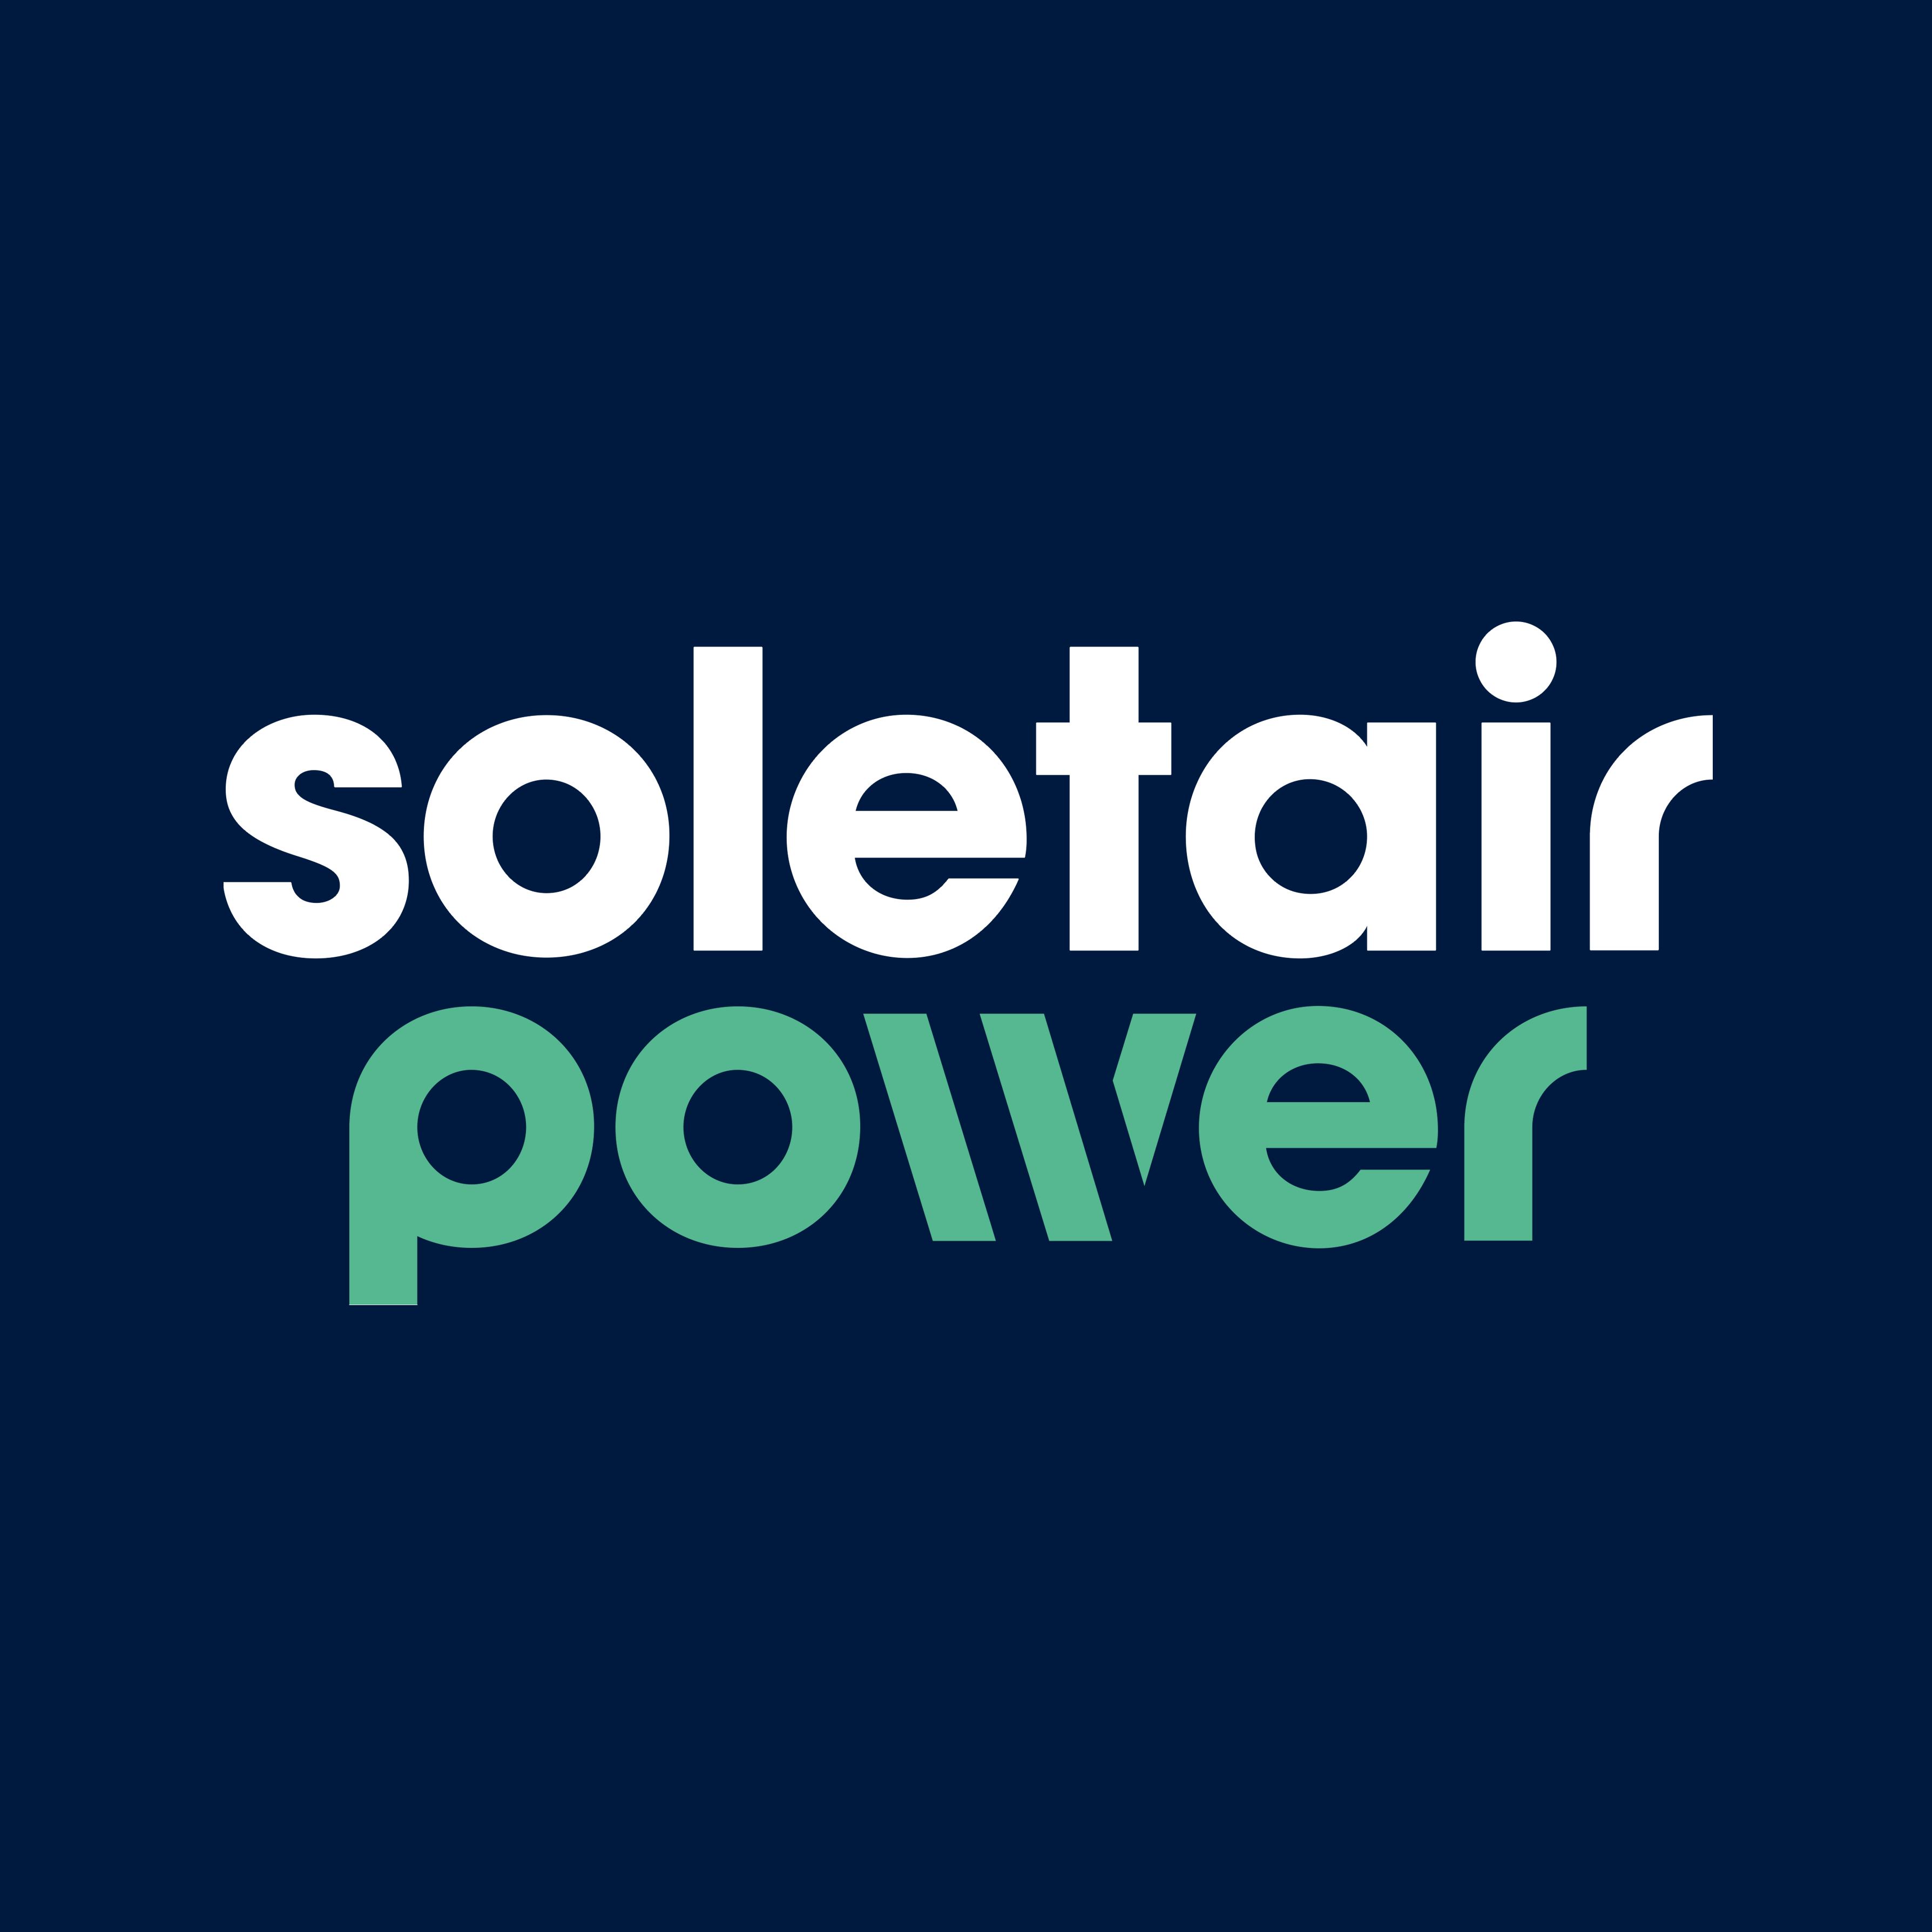 soletair power square logo dark png